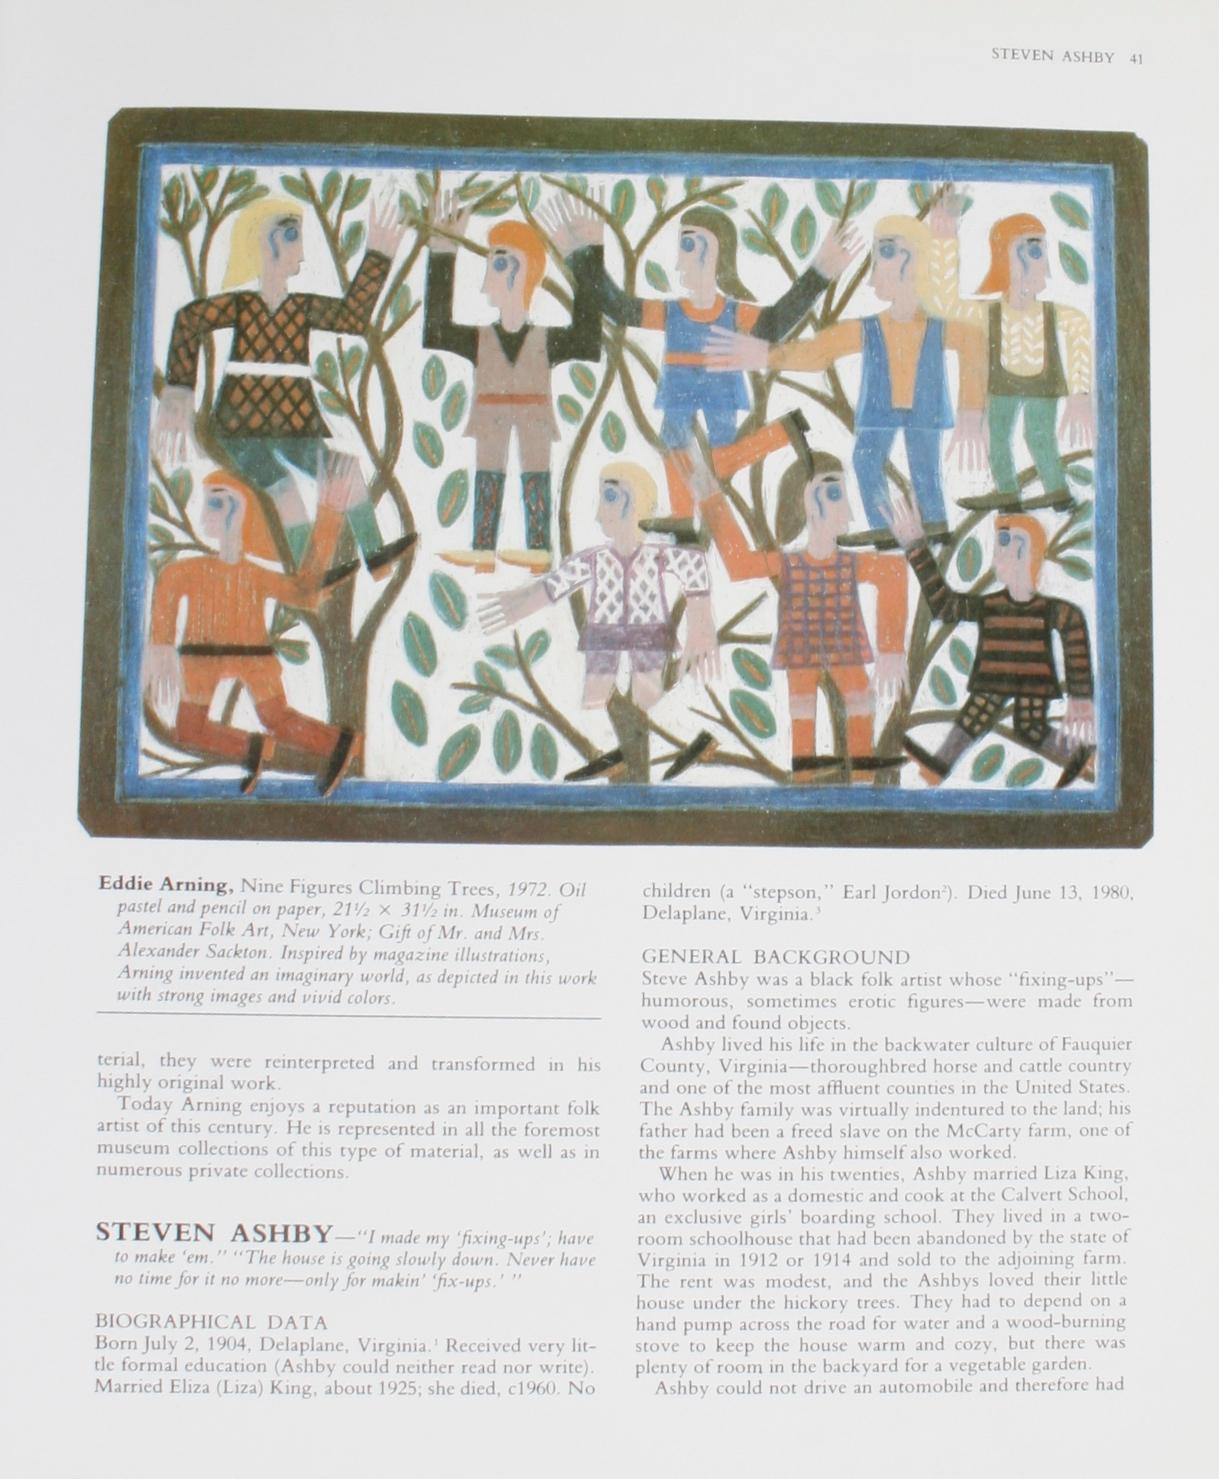 Paper Museum of American Folk Art, Encyclopaedia of 20th Century Folk Art & Artists